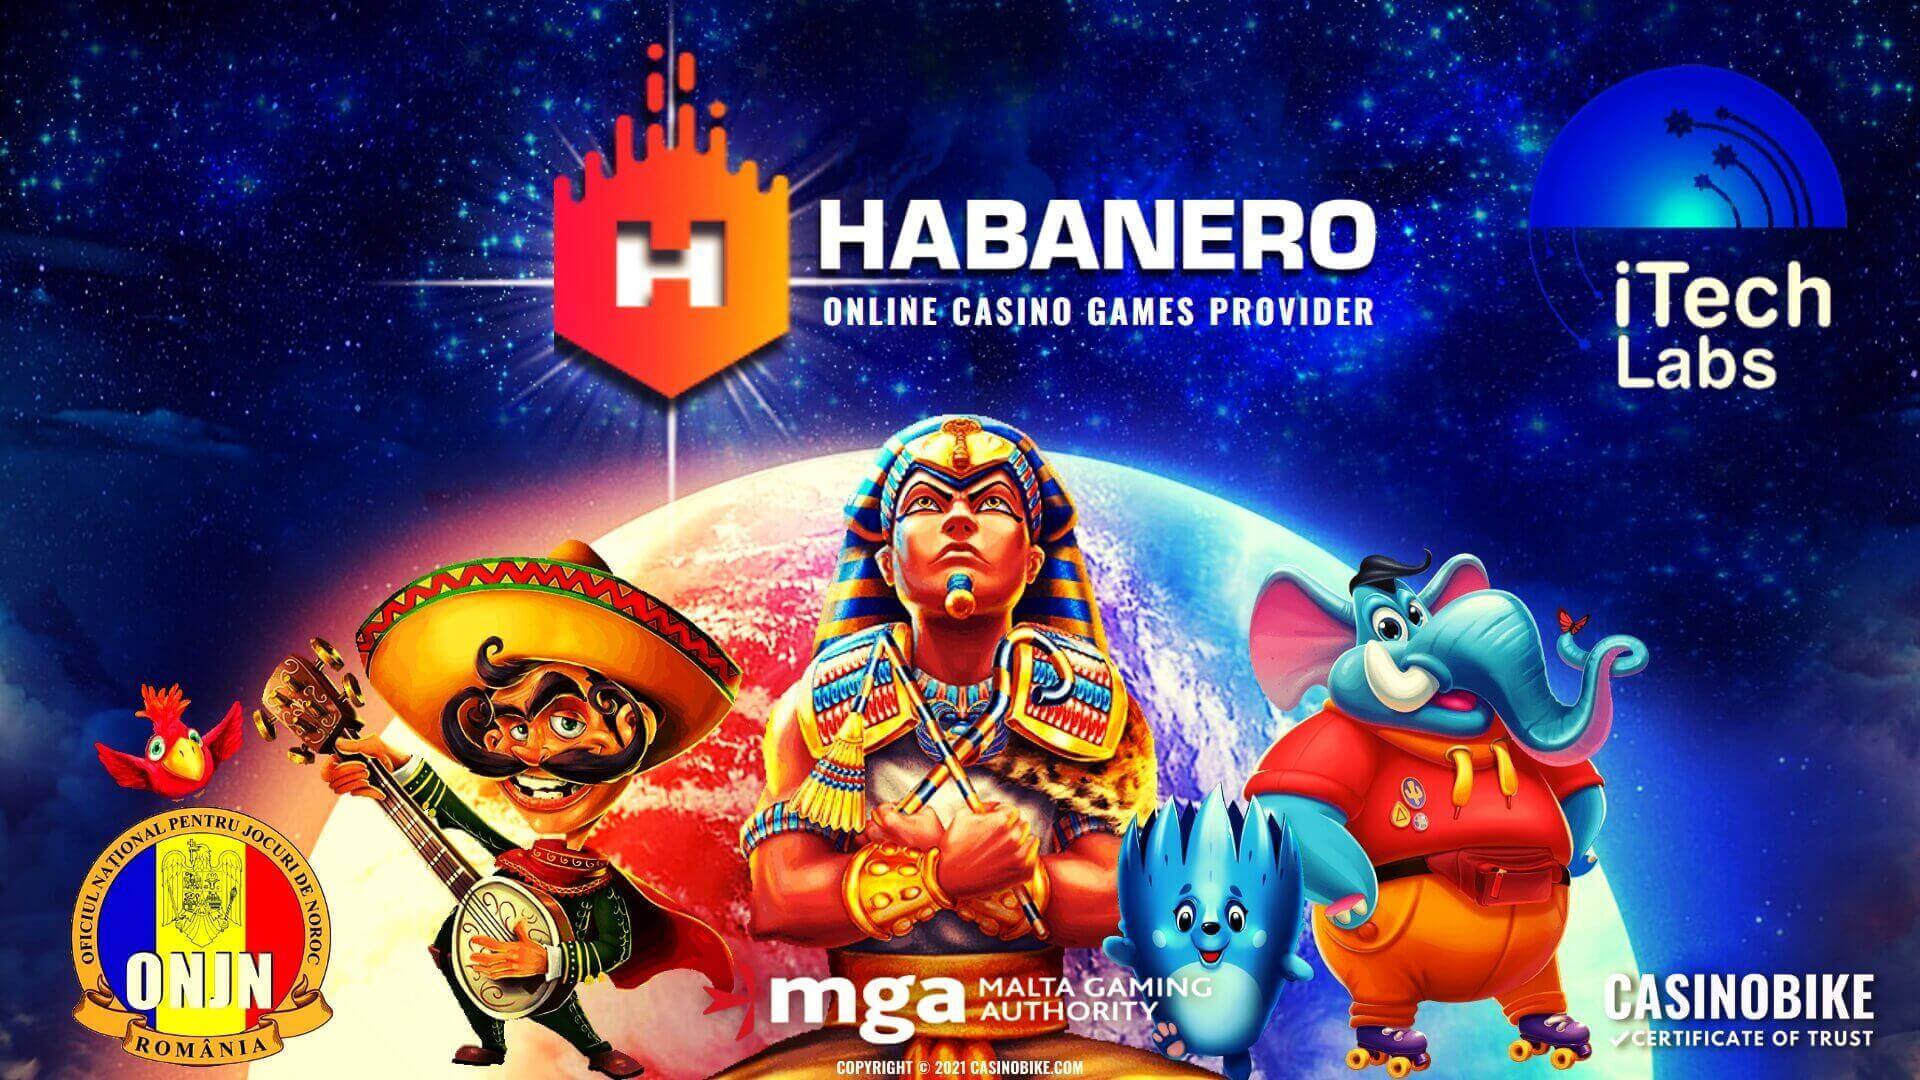 Habanero Systems Online Casino Games Provider